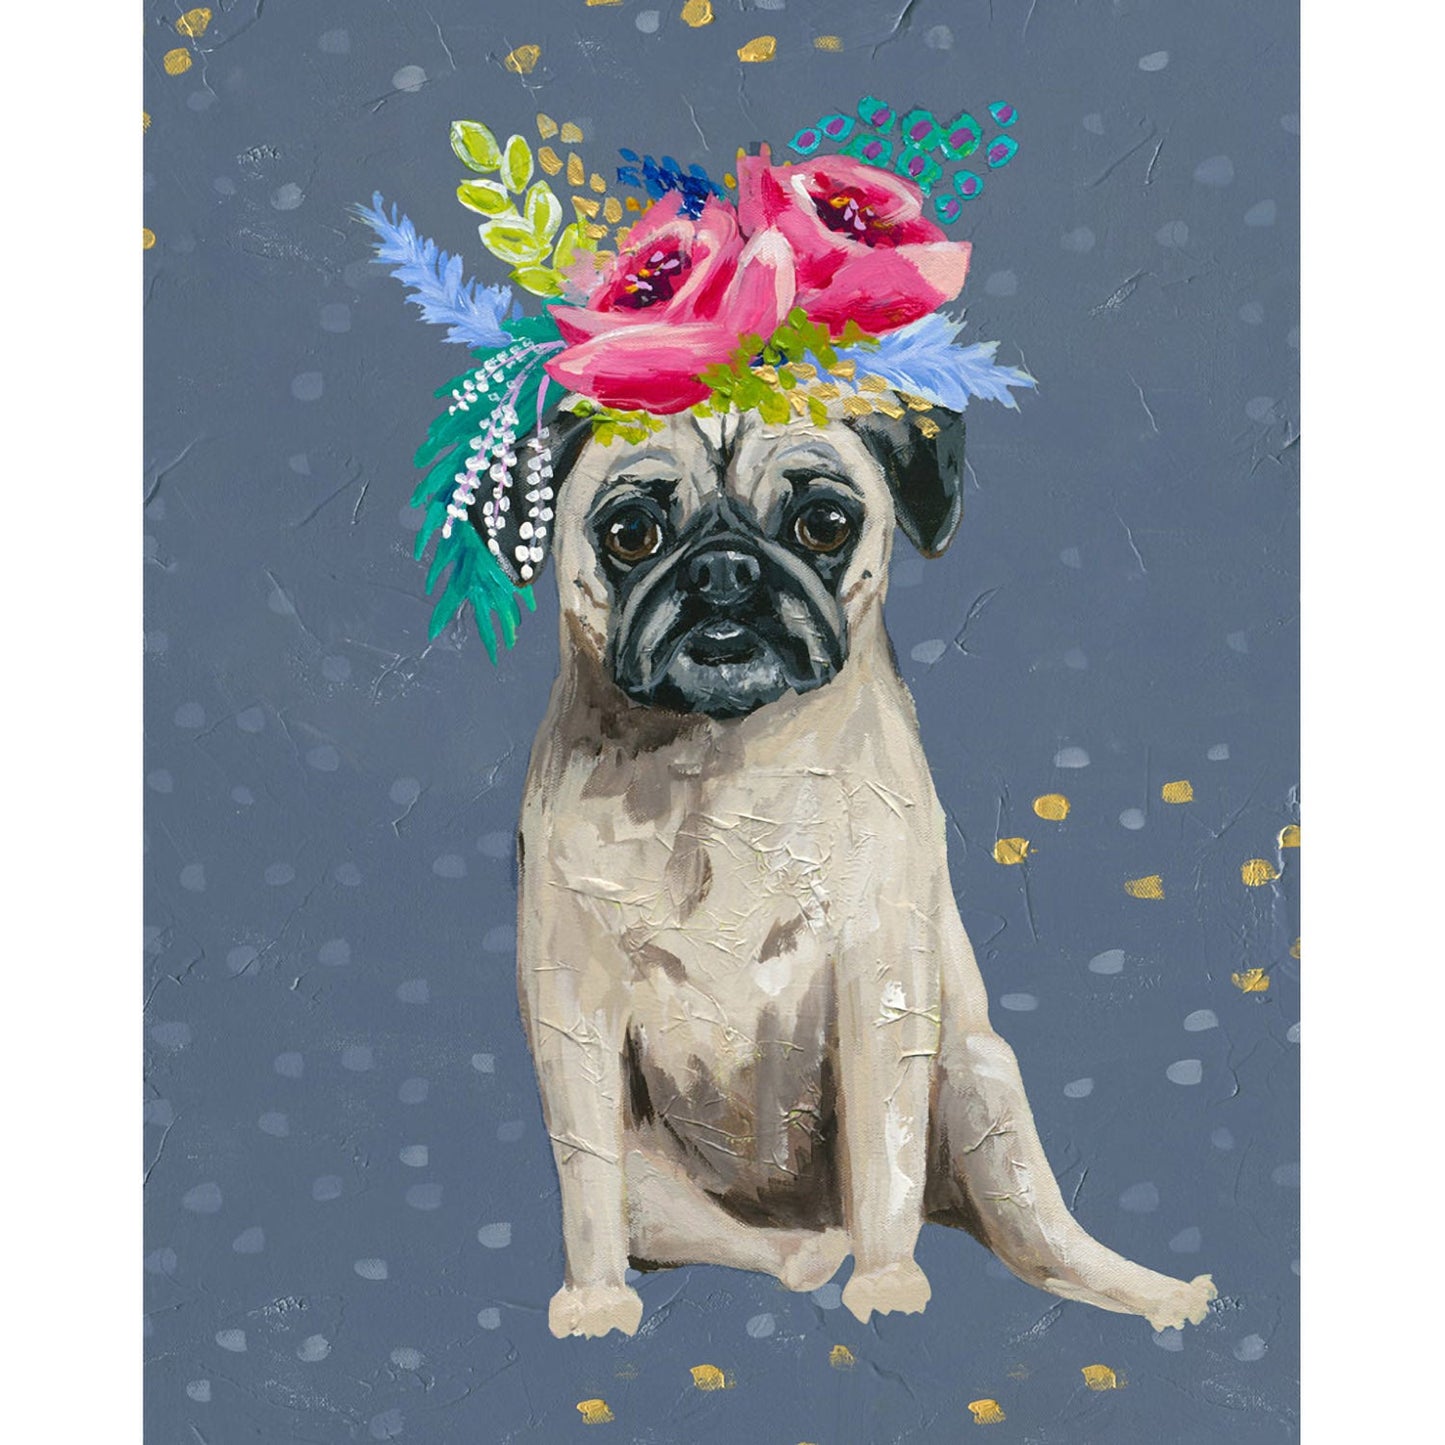 Fancy Pugs - Floral Canvas Wall Art